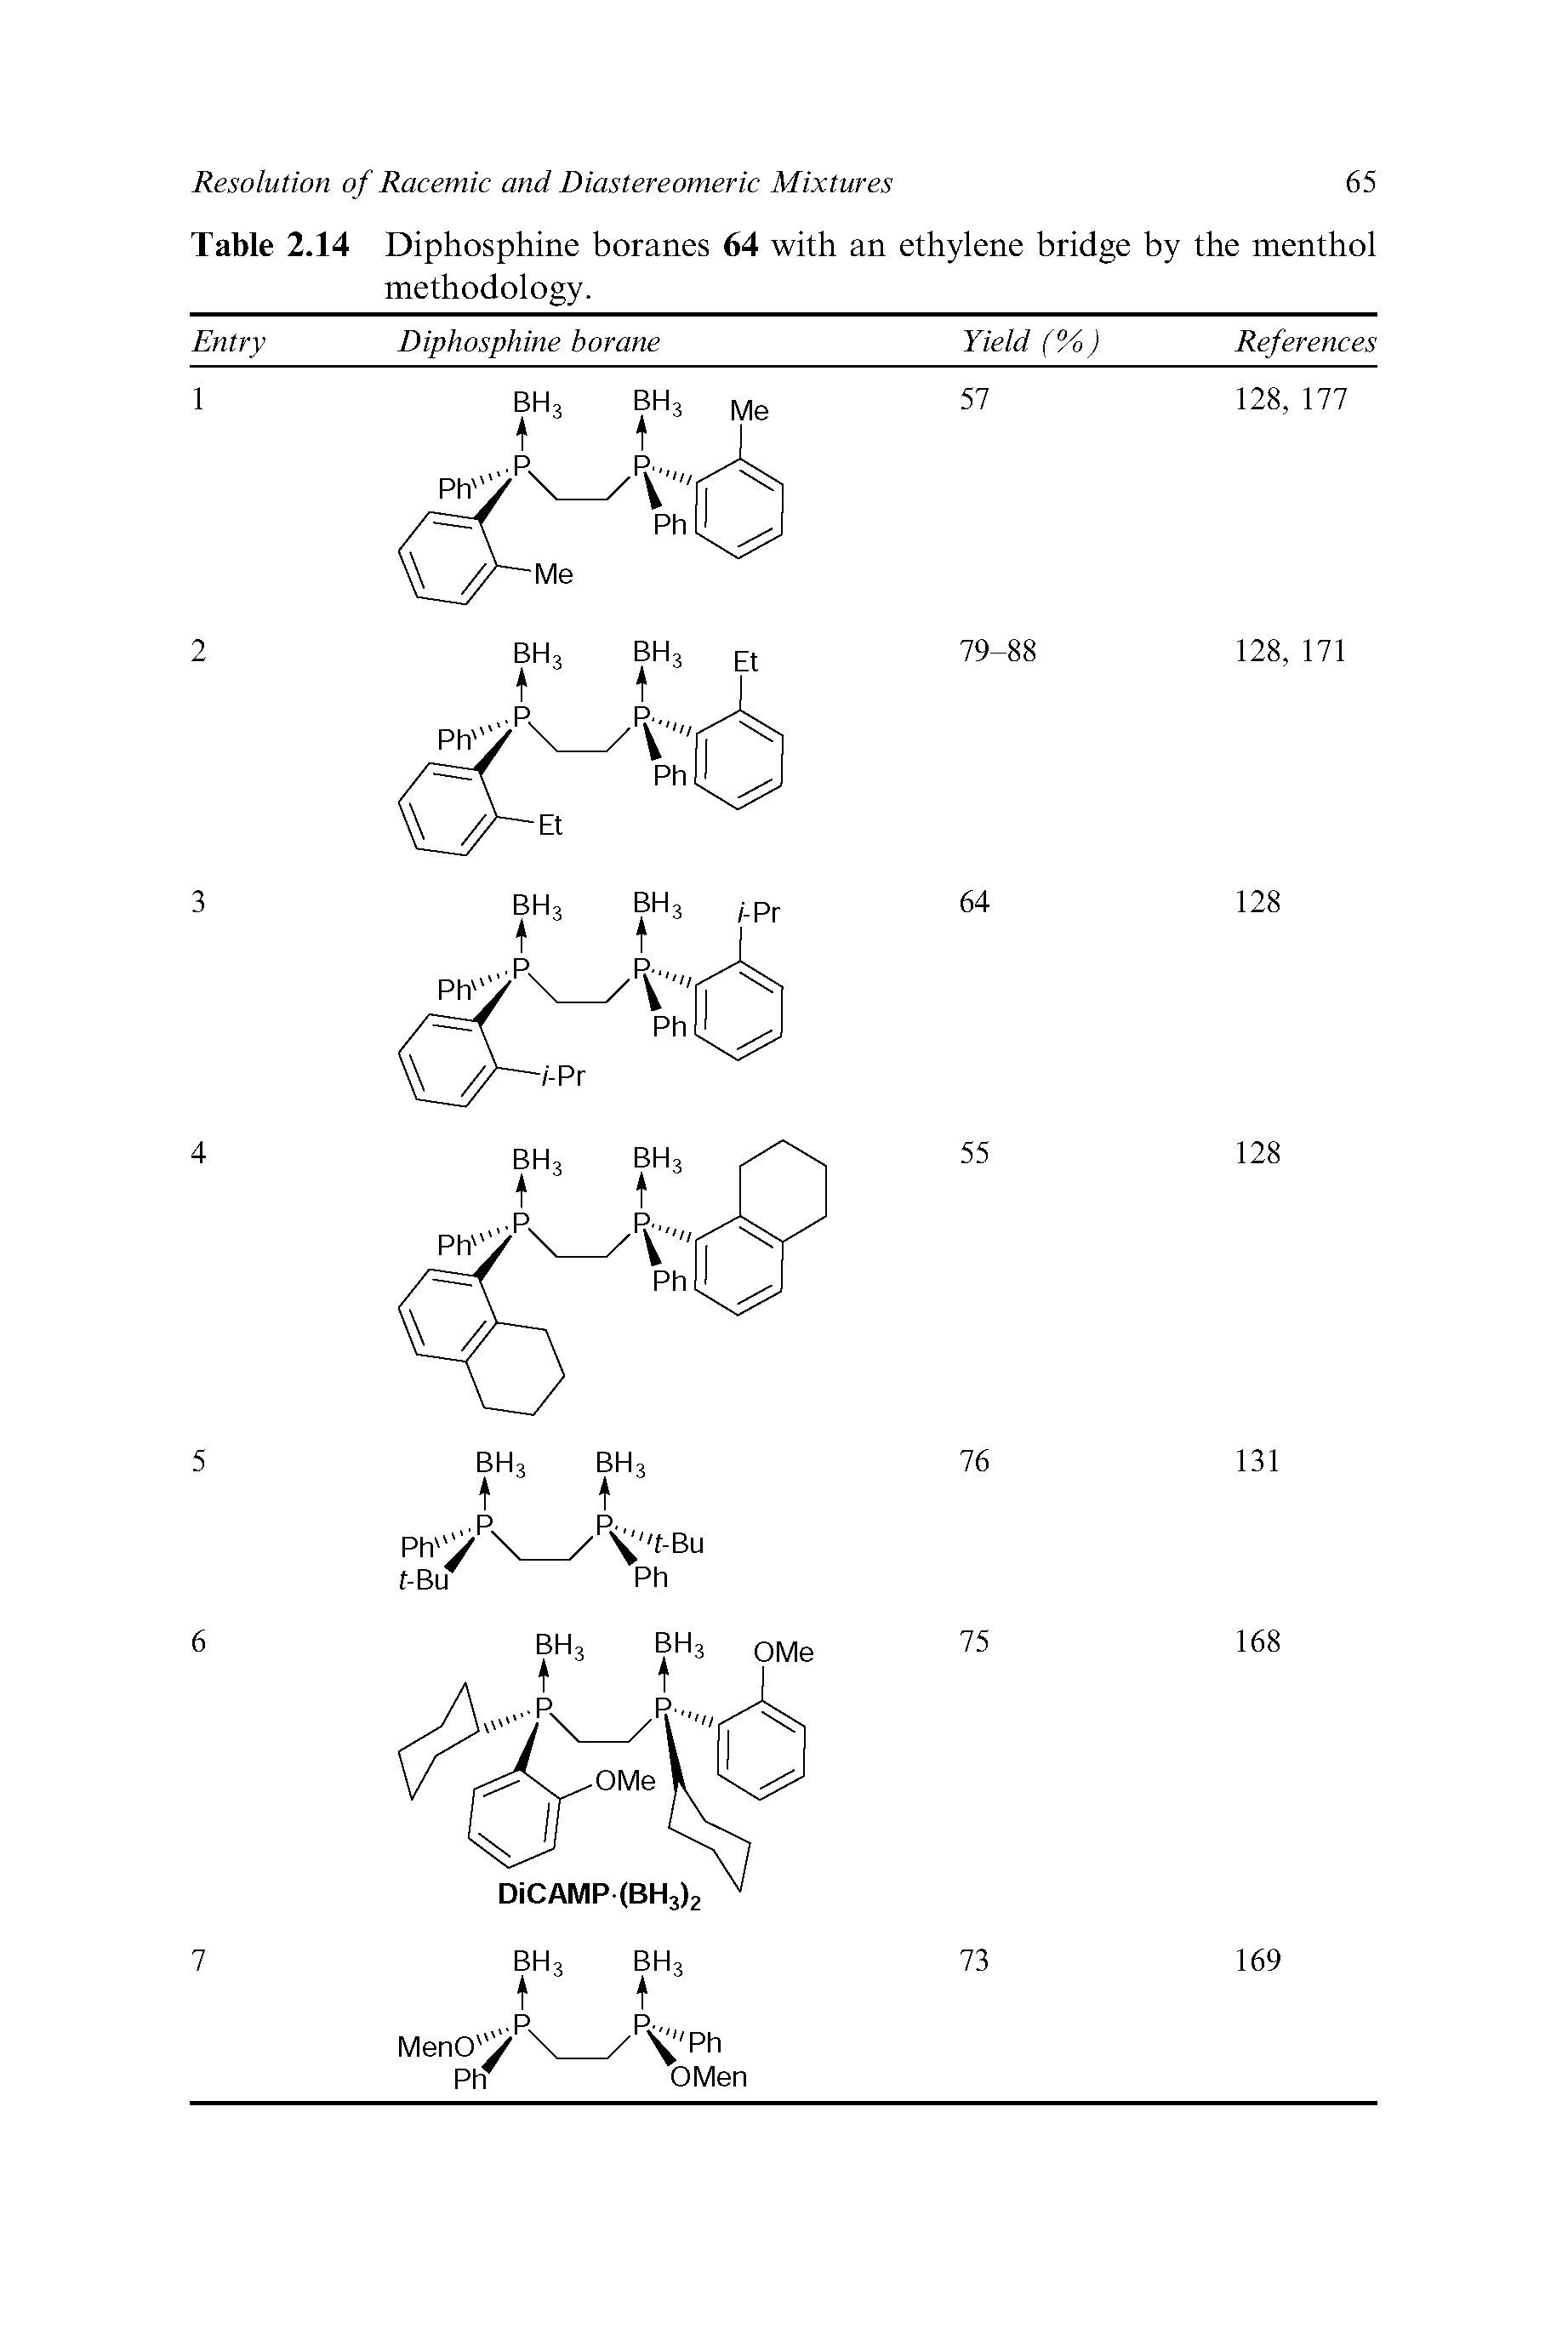 Table 2.14 Diphosphine boranes 64 with an ethylene bridge by the menthol methodology.